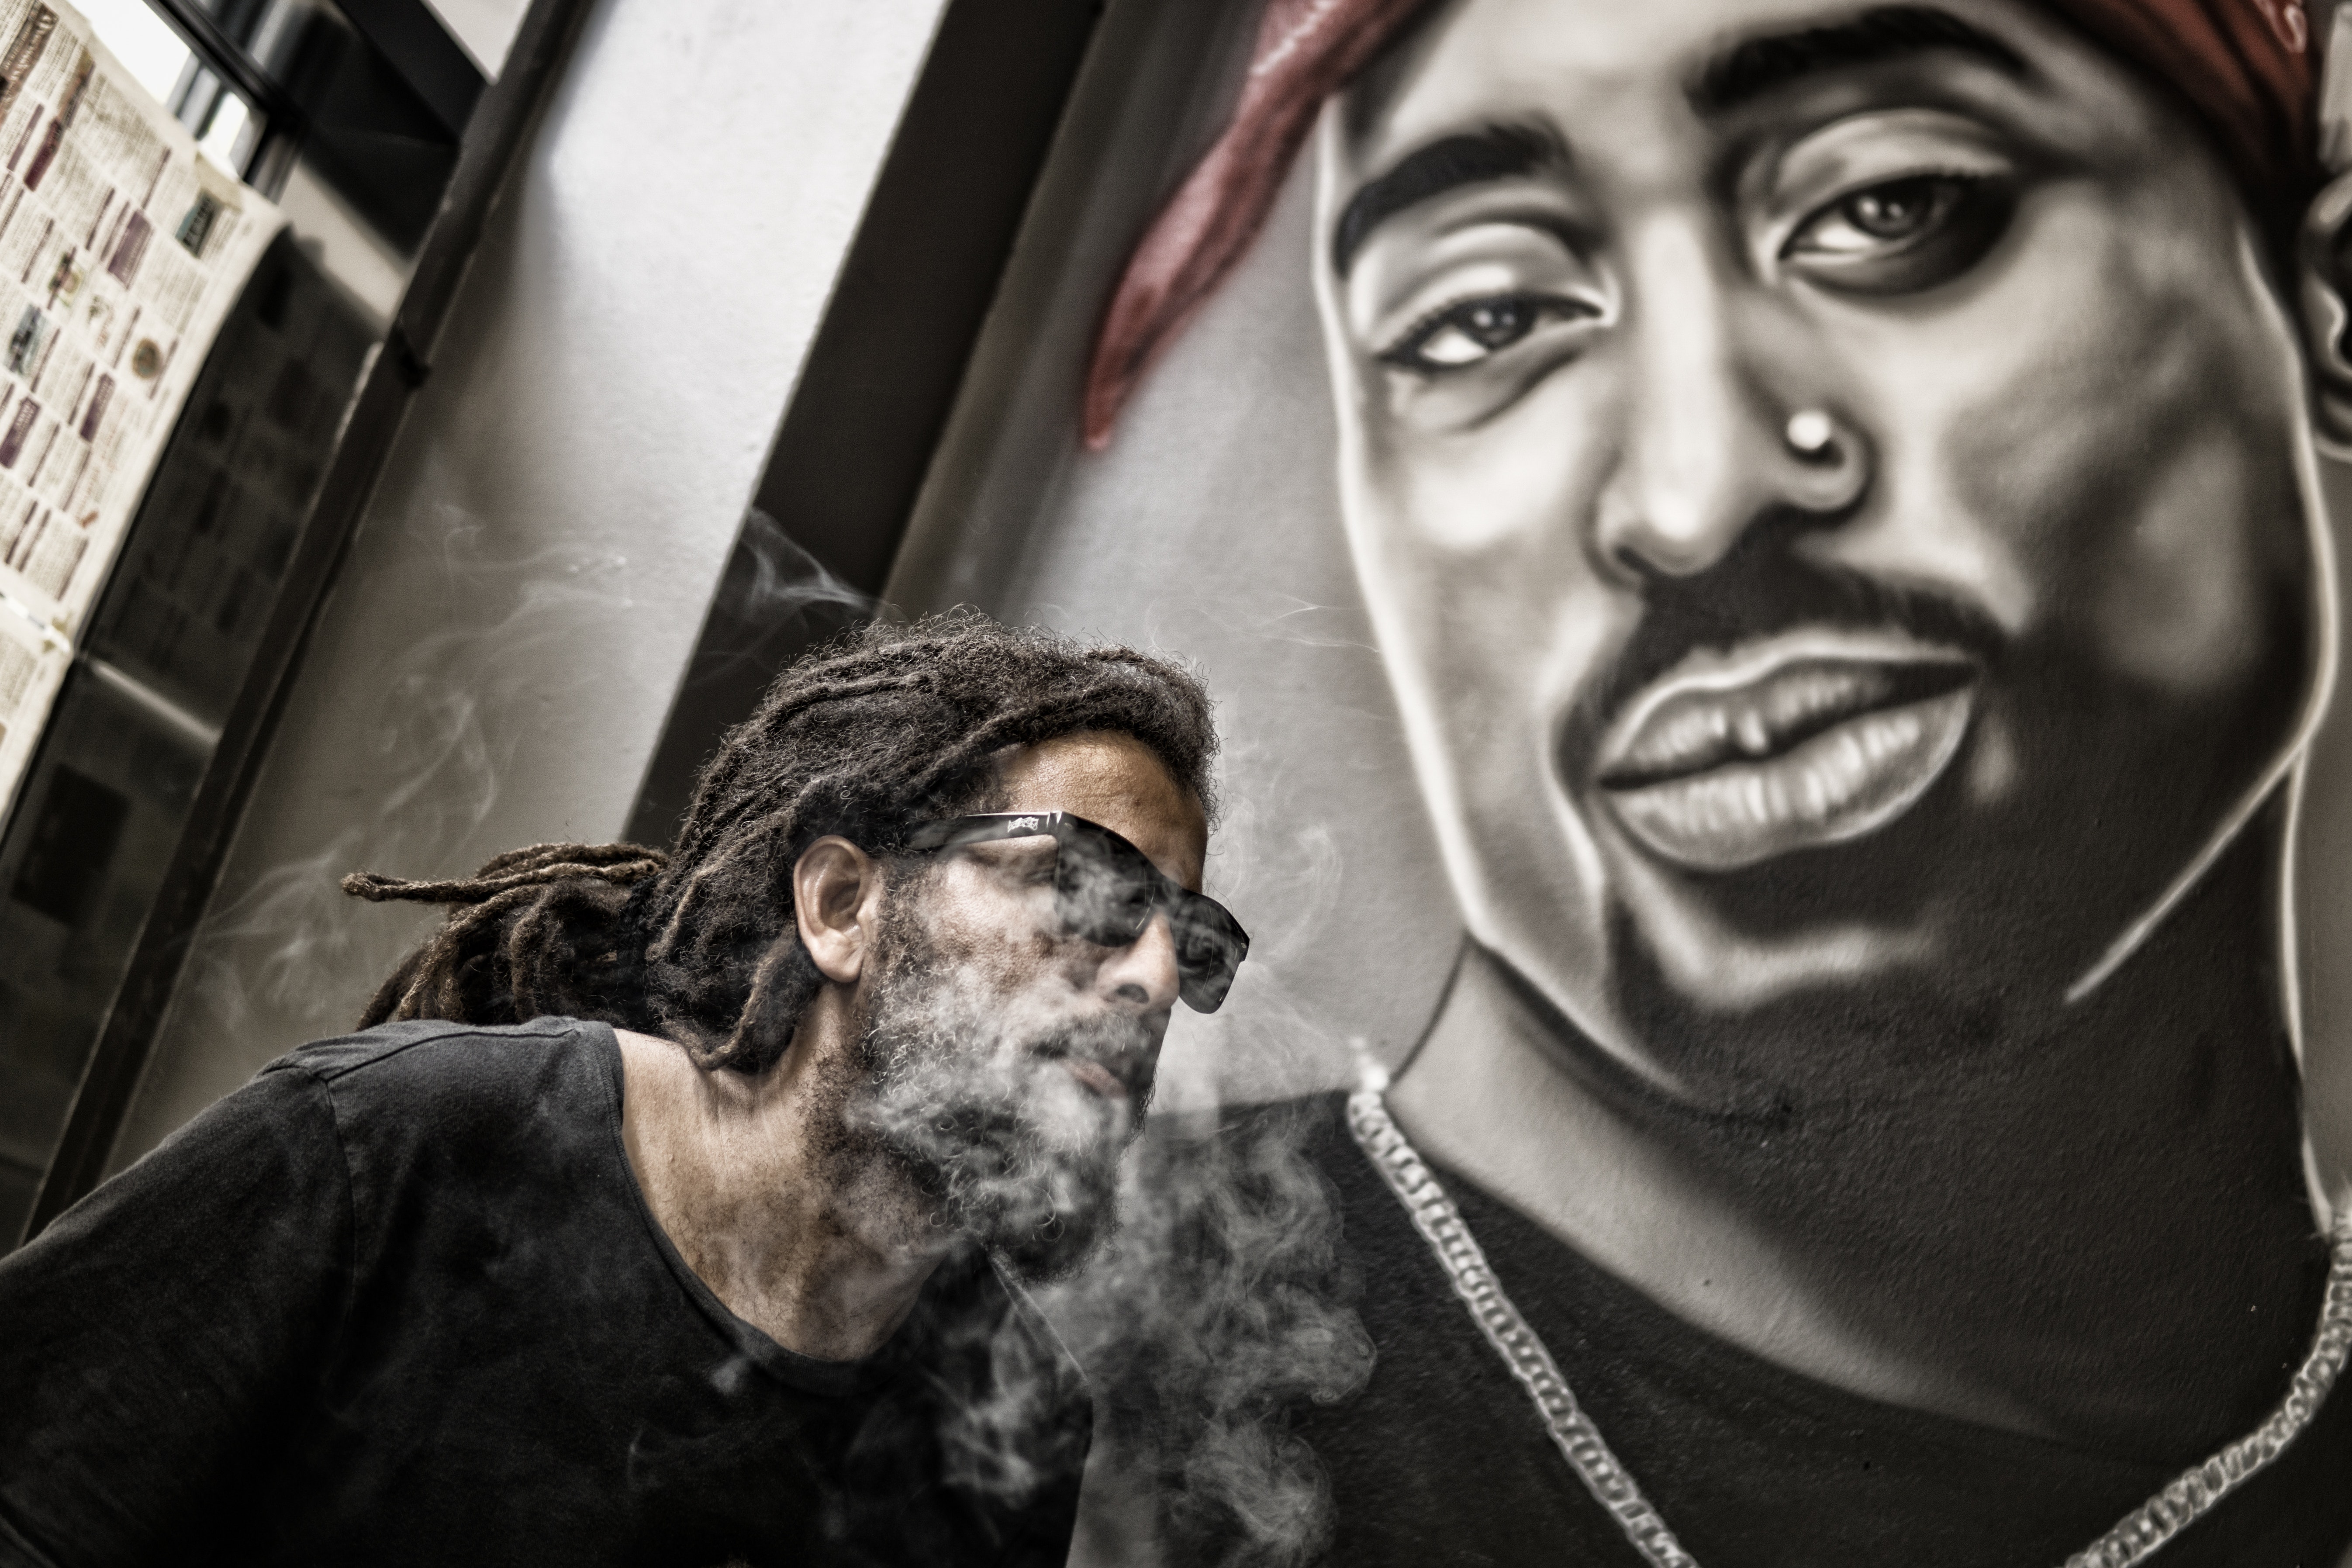 Man With Dreadlocks and Sunglasses Poses Near Tupac Shakur Portrait, Actor, Wall, Urban, Sunglasses, HQ Photo